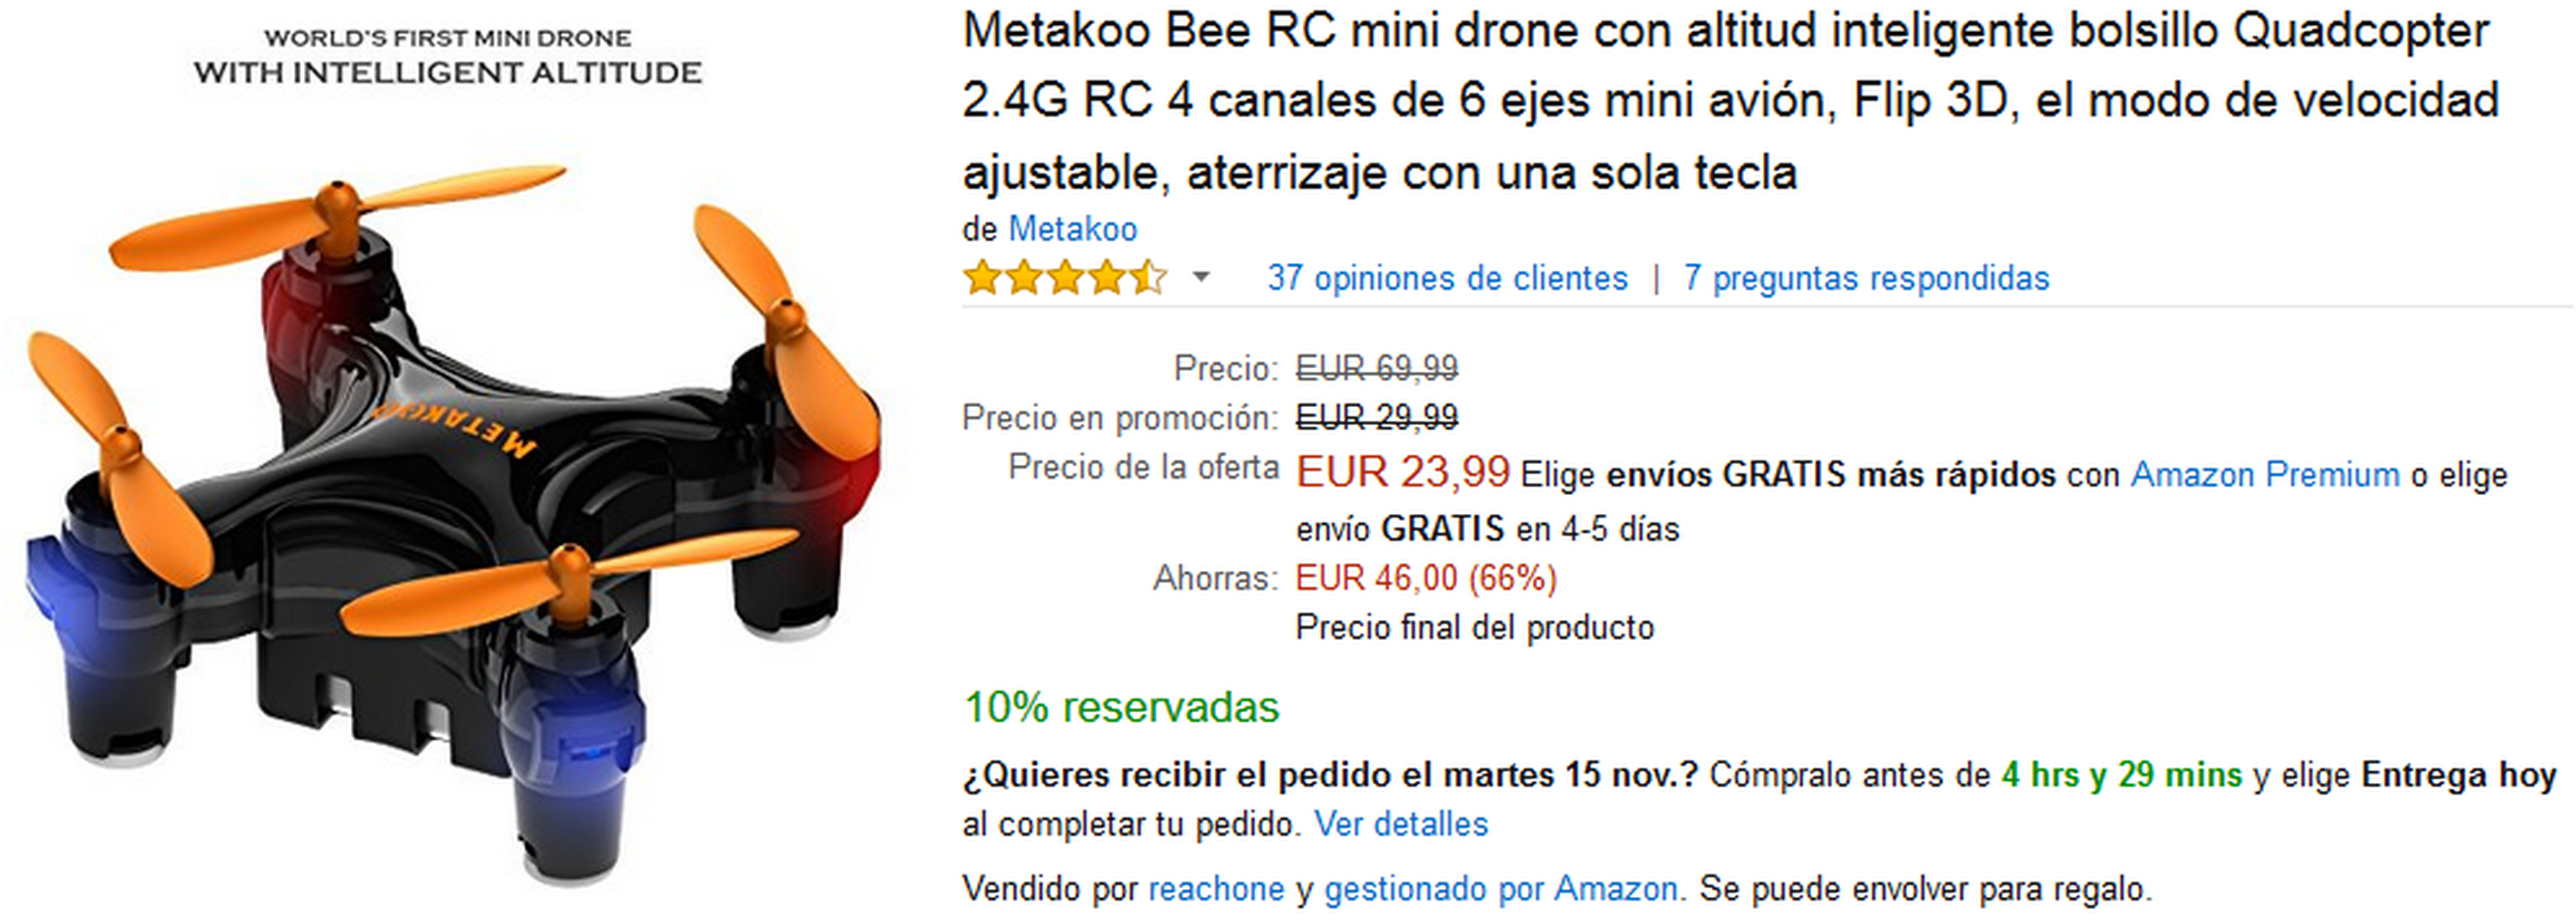 Dron Metakoo Bee RC mini por 23,99 €